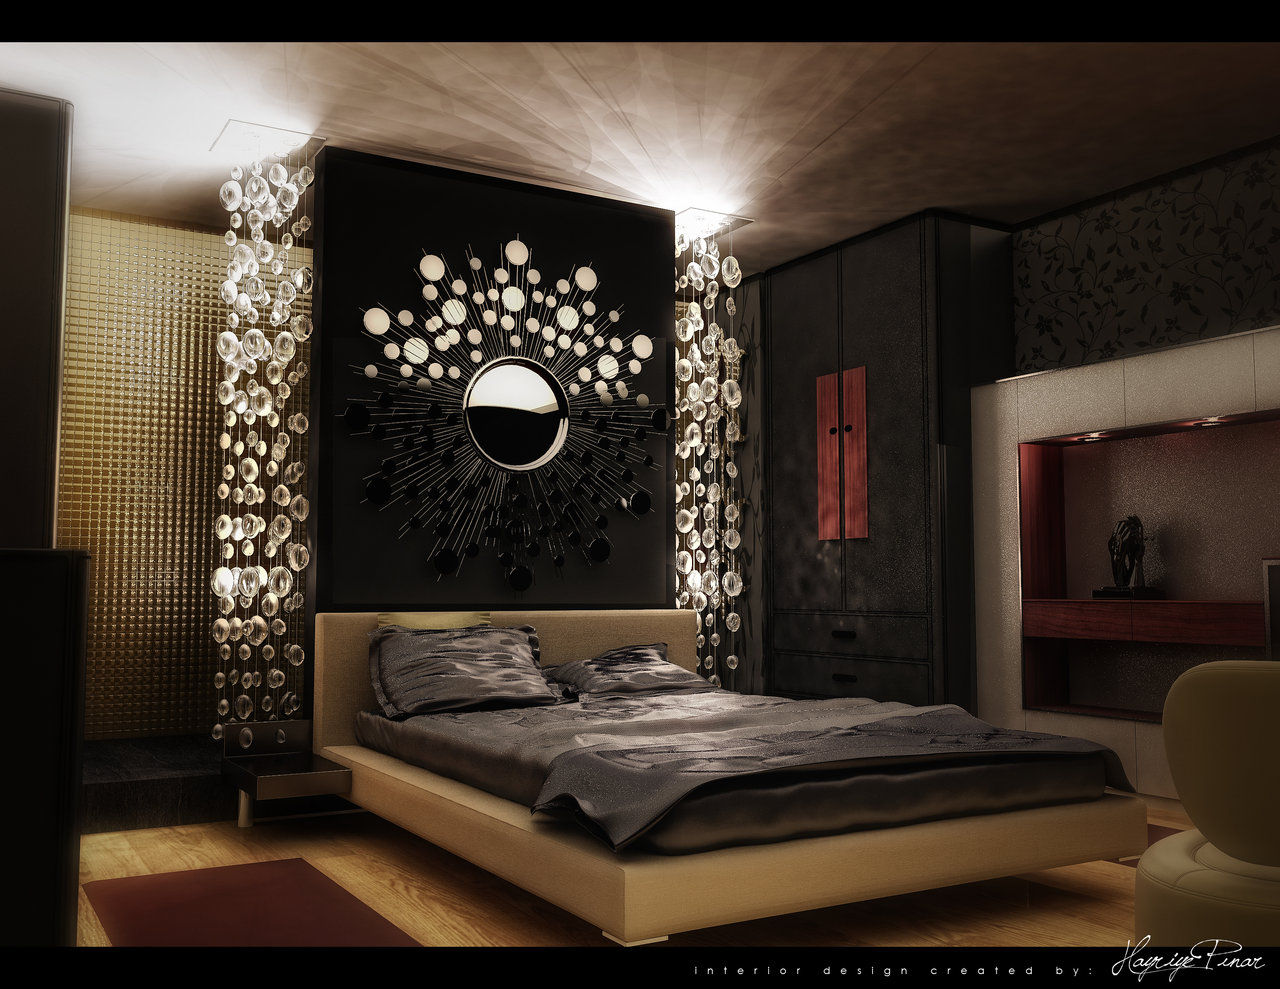 modern bedroom design "width =" 1280 "height =" 989 "srcset =" https://mileray.com/wp-content/uploads/2020/05/1588508949_775_Simple-and-Minimalist-Bedroom-Interior-Design-Ideas-Looks-Charming-With.jpg 1280w, https://mileray.com/ wp -content / uploads / 2016/10 / HePe-Design-300x232.jpg 300w, https://mileray.com/wp-content/uploads/2016/10/HePe-Design-768x593.jpg 768w, https: // myfashionos .com / wp-content / uploads / 2016/10 / HePe-Design-1024x791.jpg 1024w, https://mileray.com/wp-content/uploads/2016/10/HePe-Design-696x538.jpg 696w, https : //mileray.com/wp-content/uploads/2016/10/HePe-Design-1068x825.jpg 1068w, https://mileray.com/wp-content/uploads/2016/10/HePe-Design-544x420. jpg 544w "sizes =" (maximum width: 1280px) 100vw, 1280px